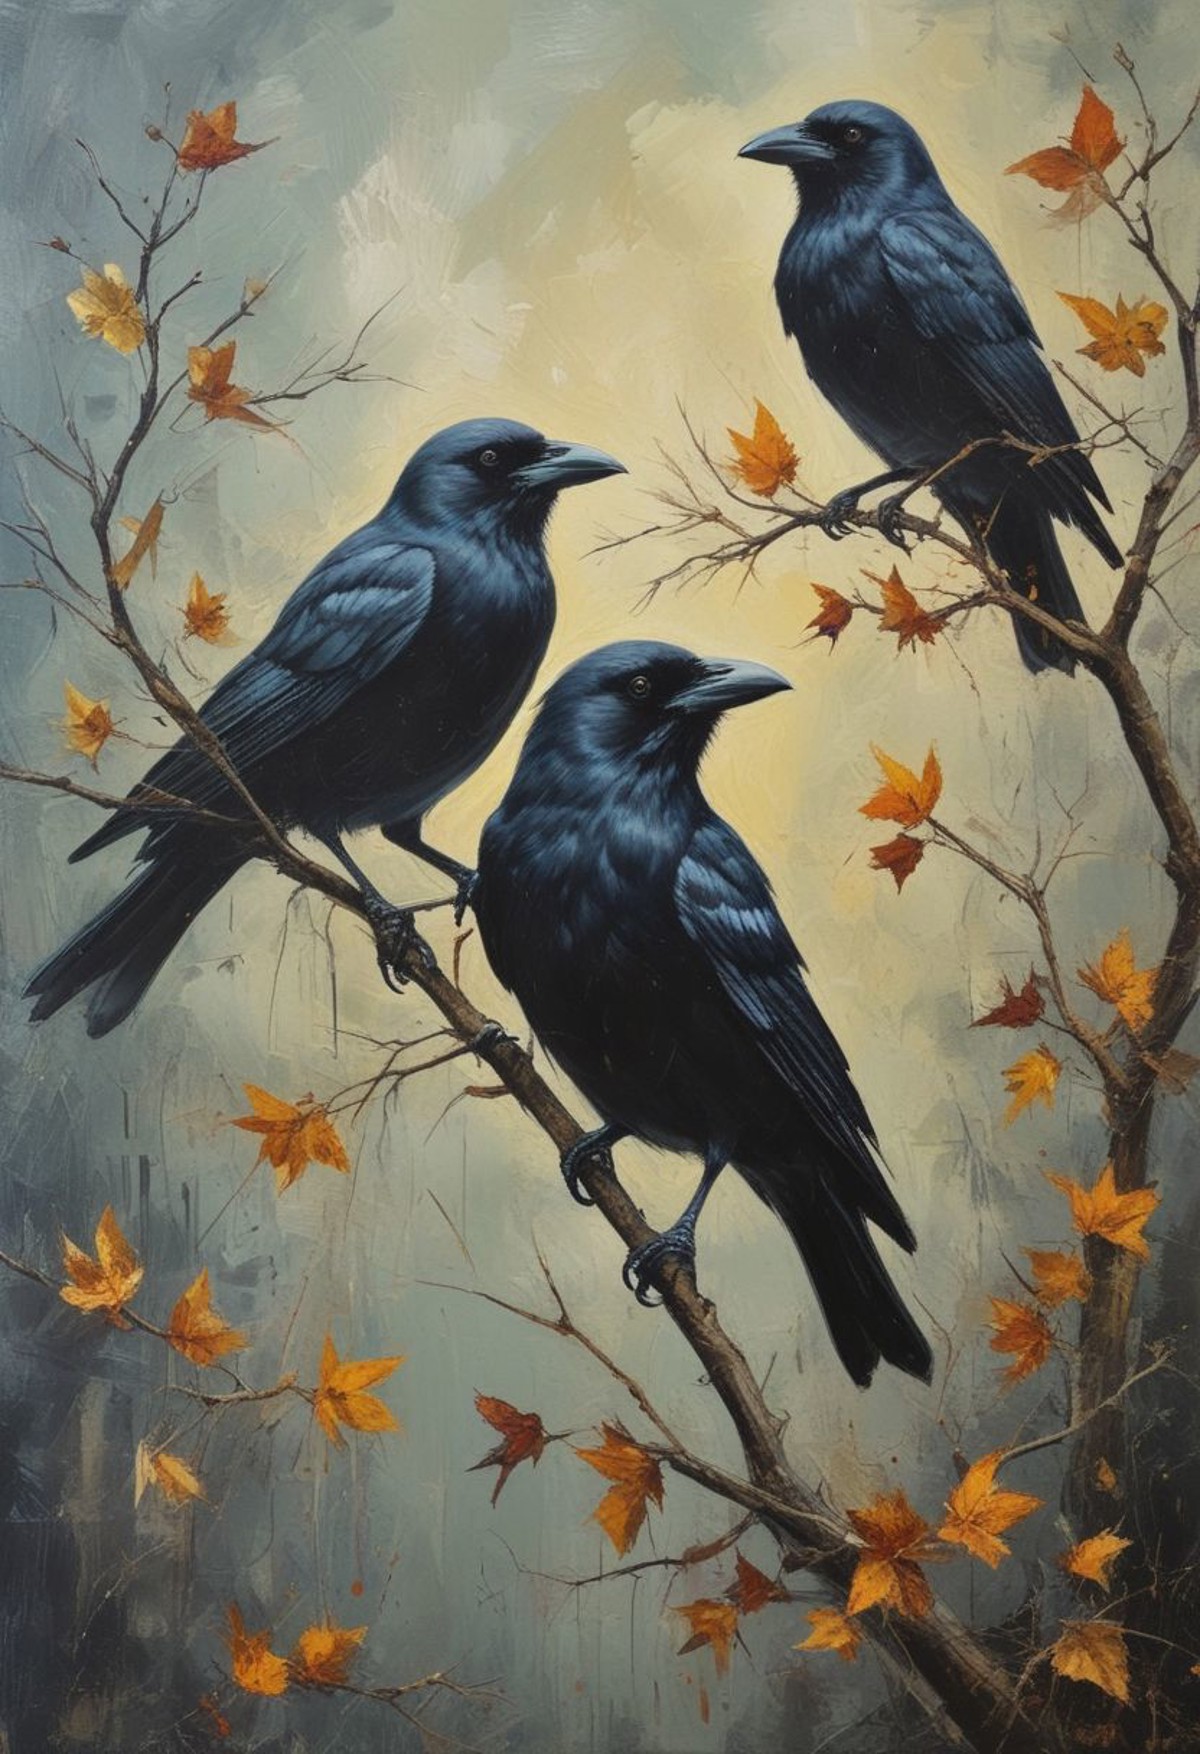 "Little crows" by Yuliya Litvinova, Oil on canvas